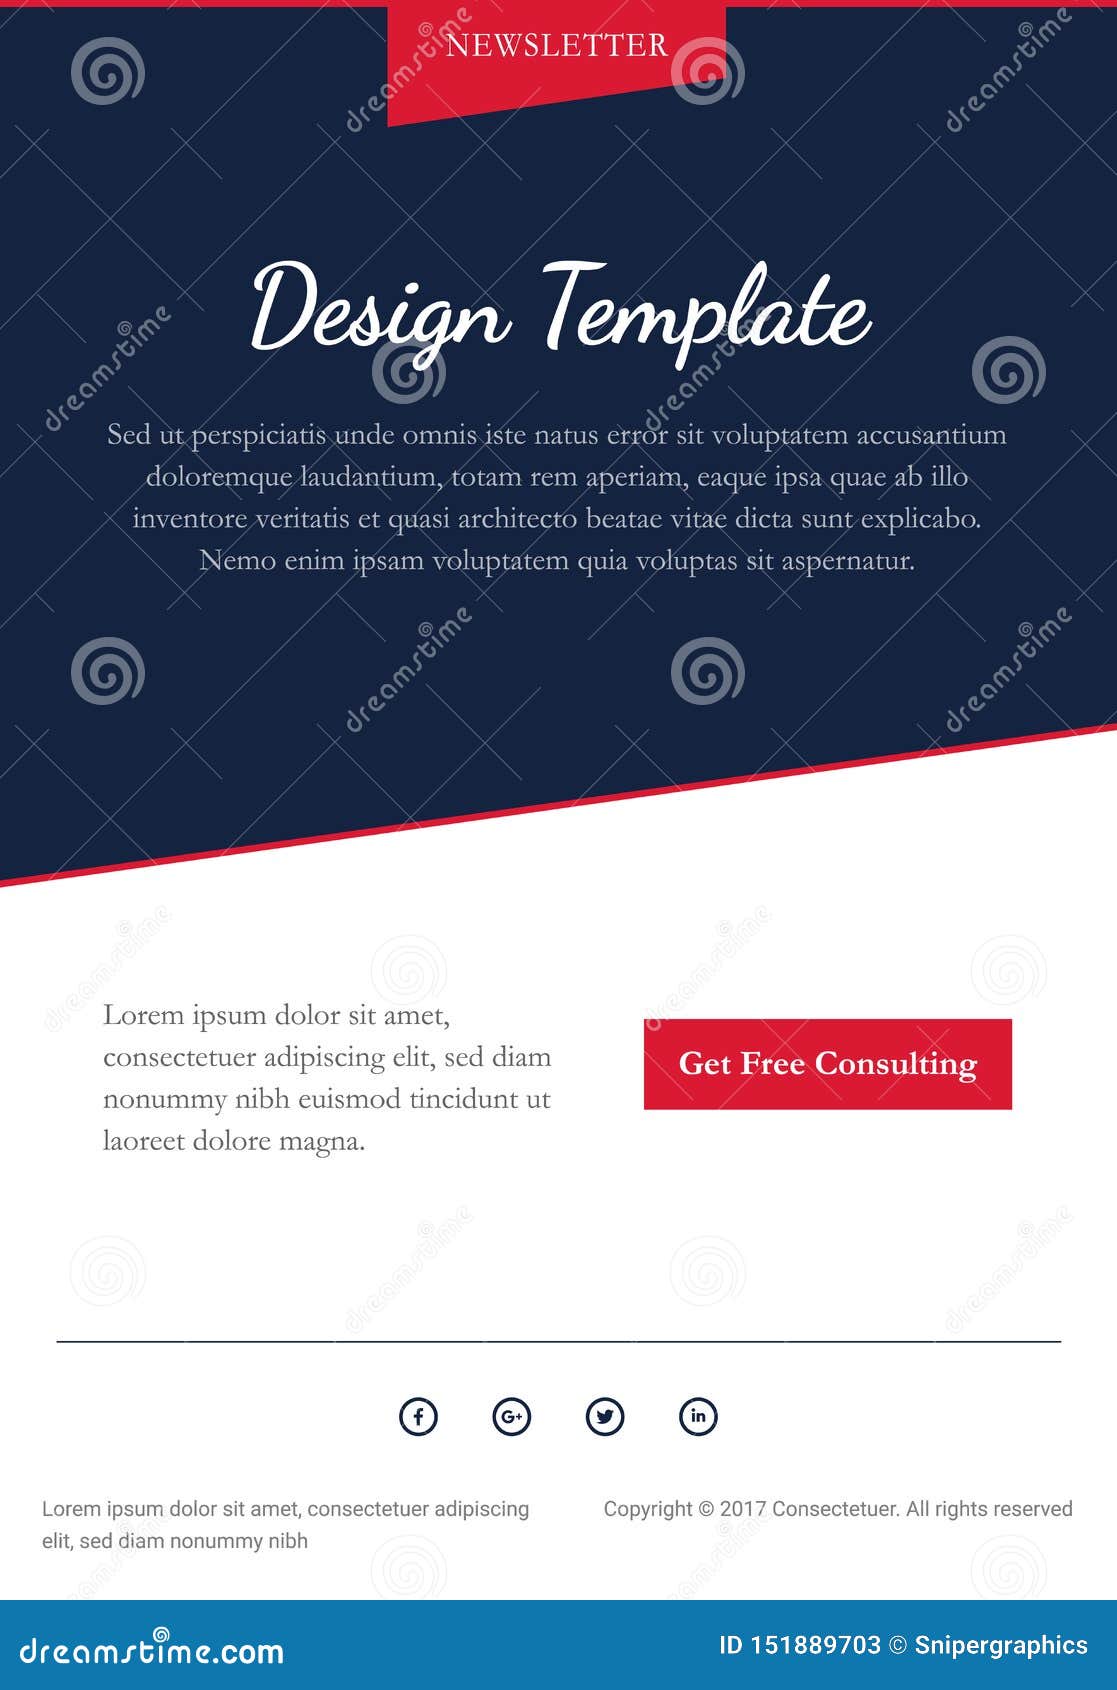 Email Newsletter Vector Design Template Stock Vector Illustration Of Blank Vector